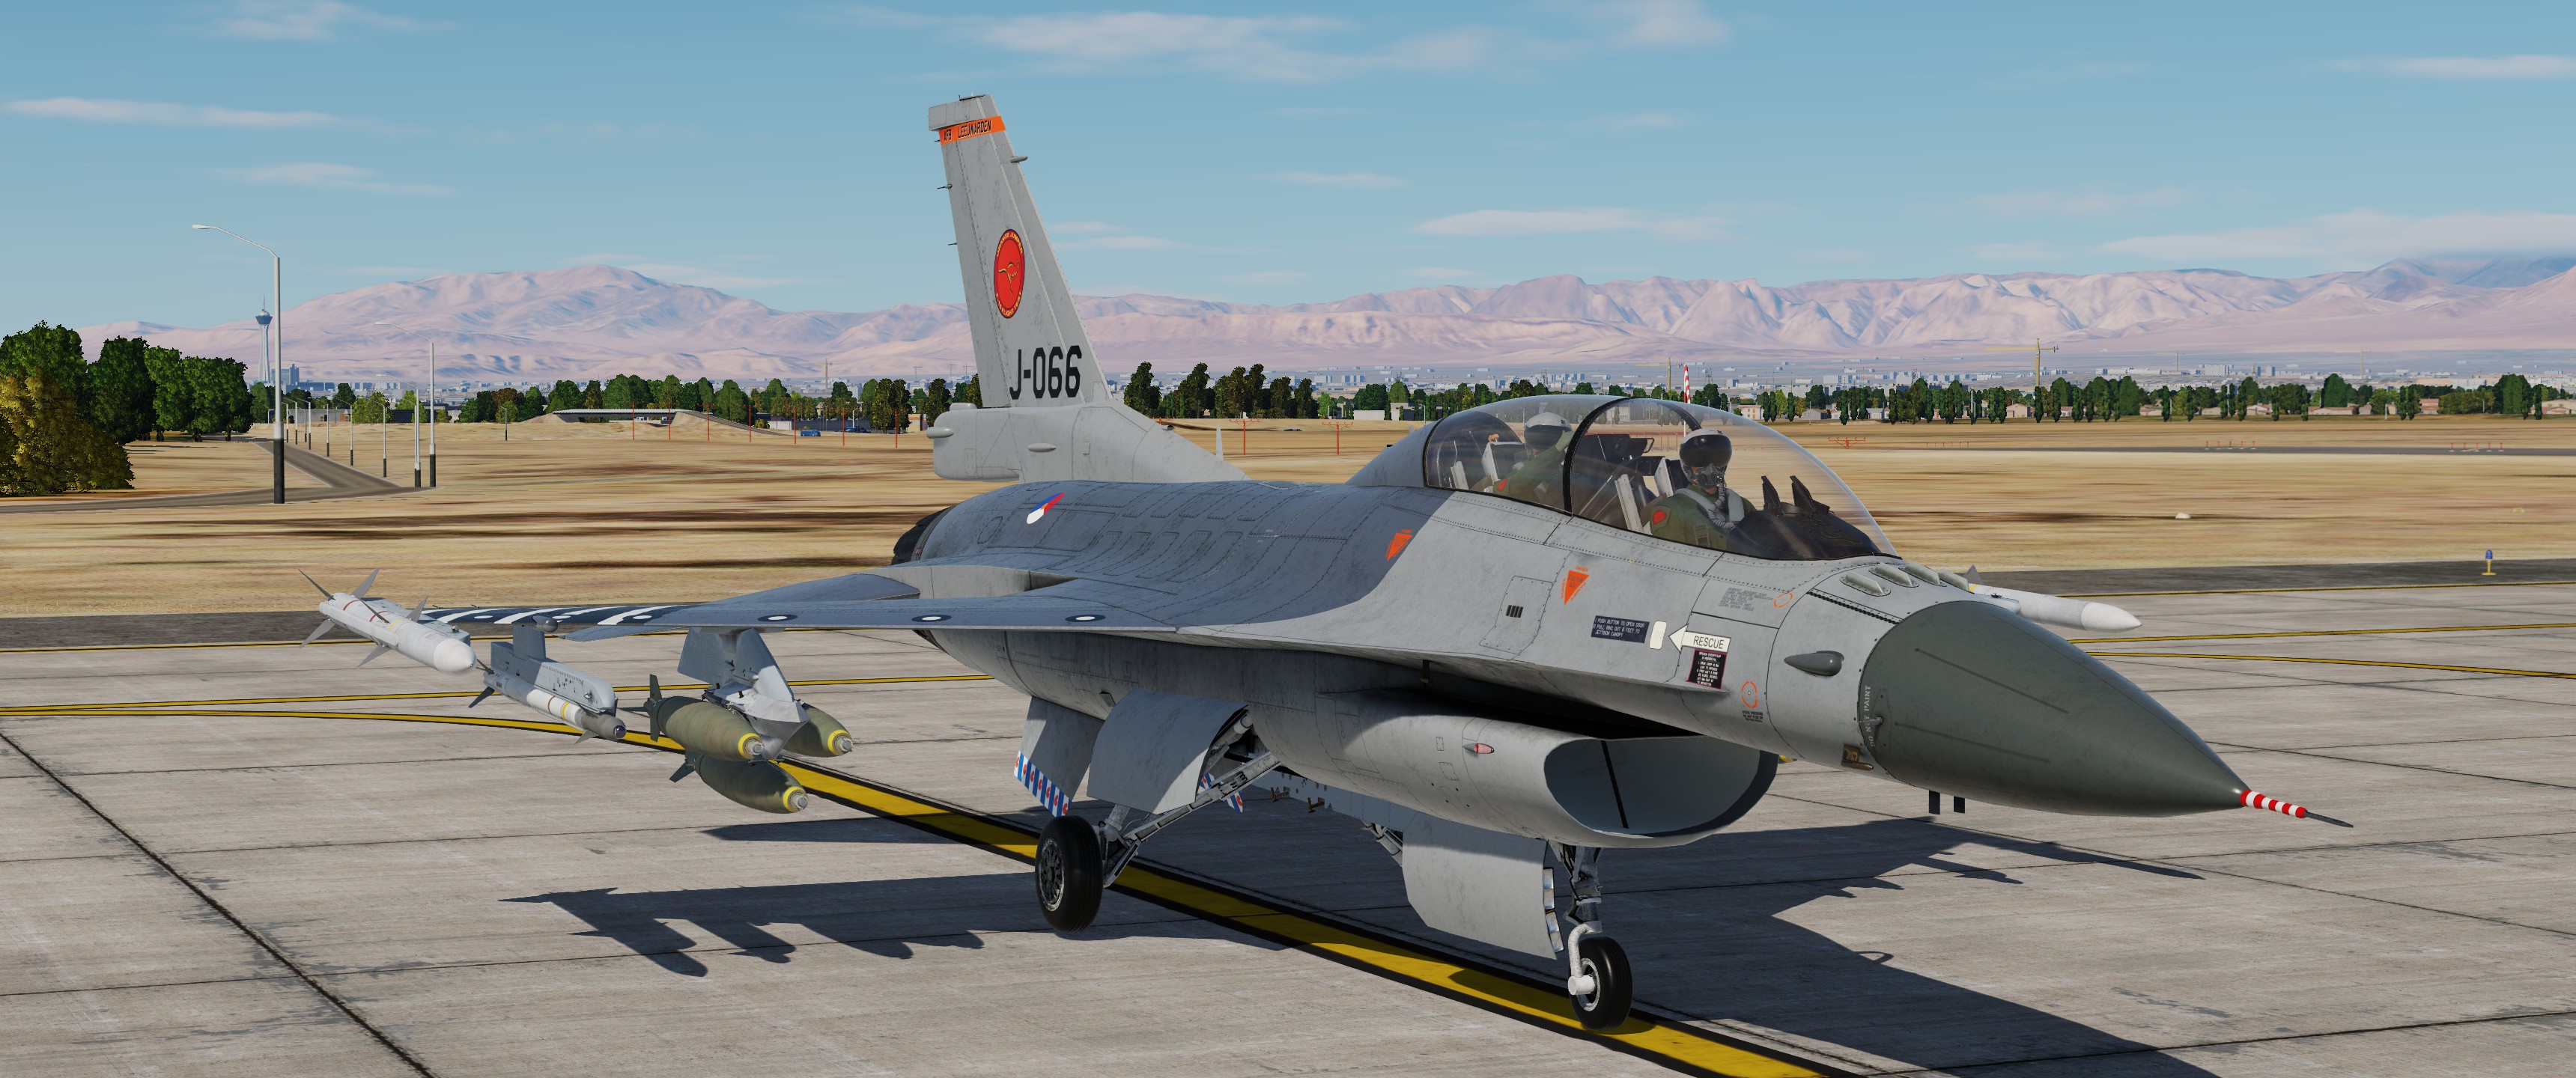 F-16D(BM) SUFA Mod J-066 RNLAF - Orange Jumper. ( updated version )